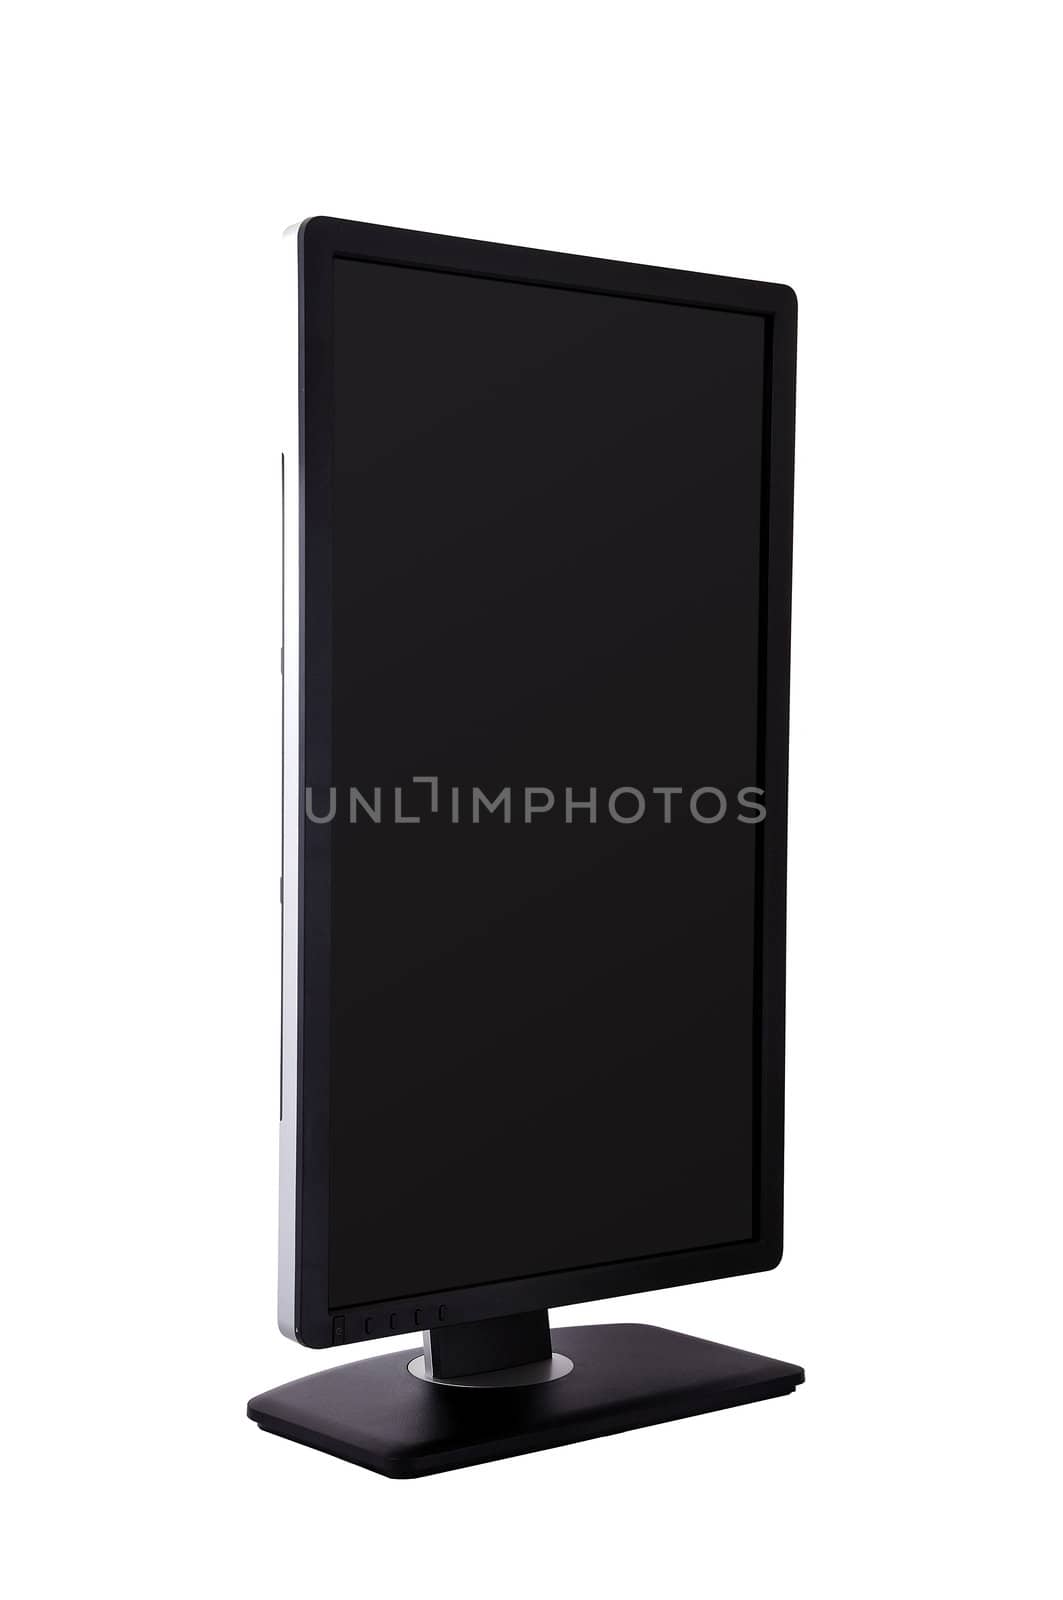 black computer monitor on white background